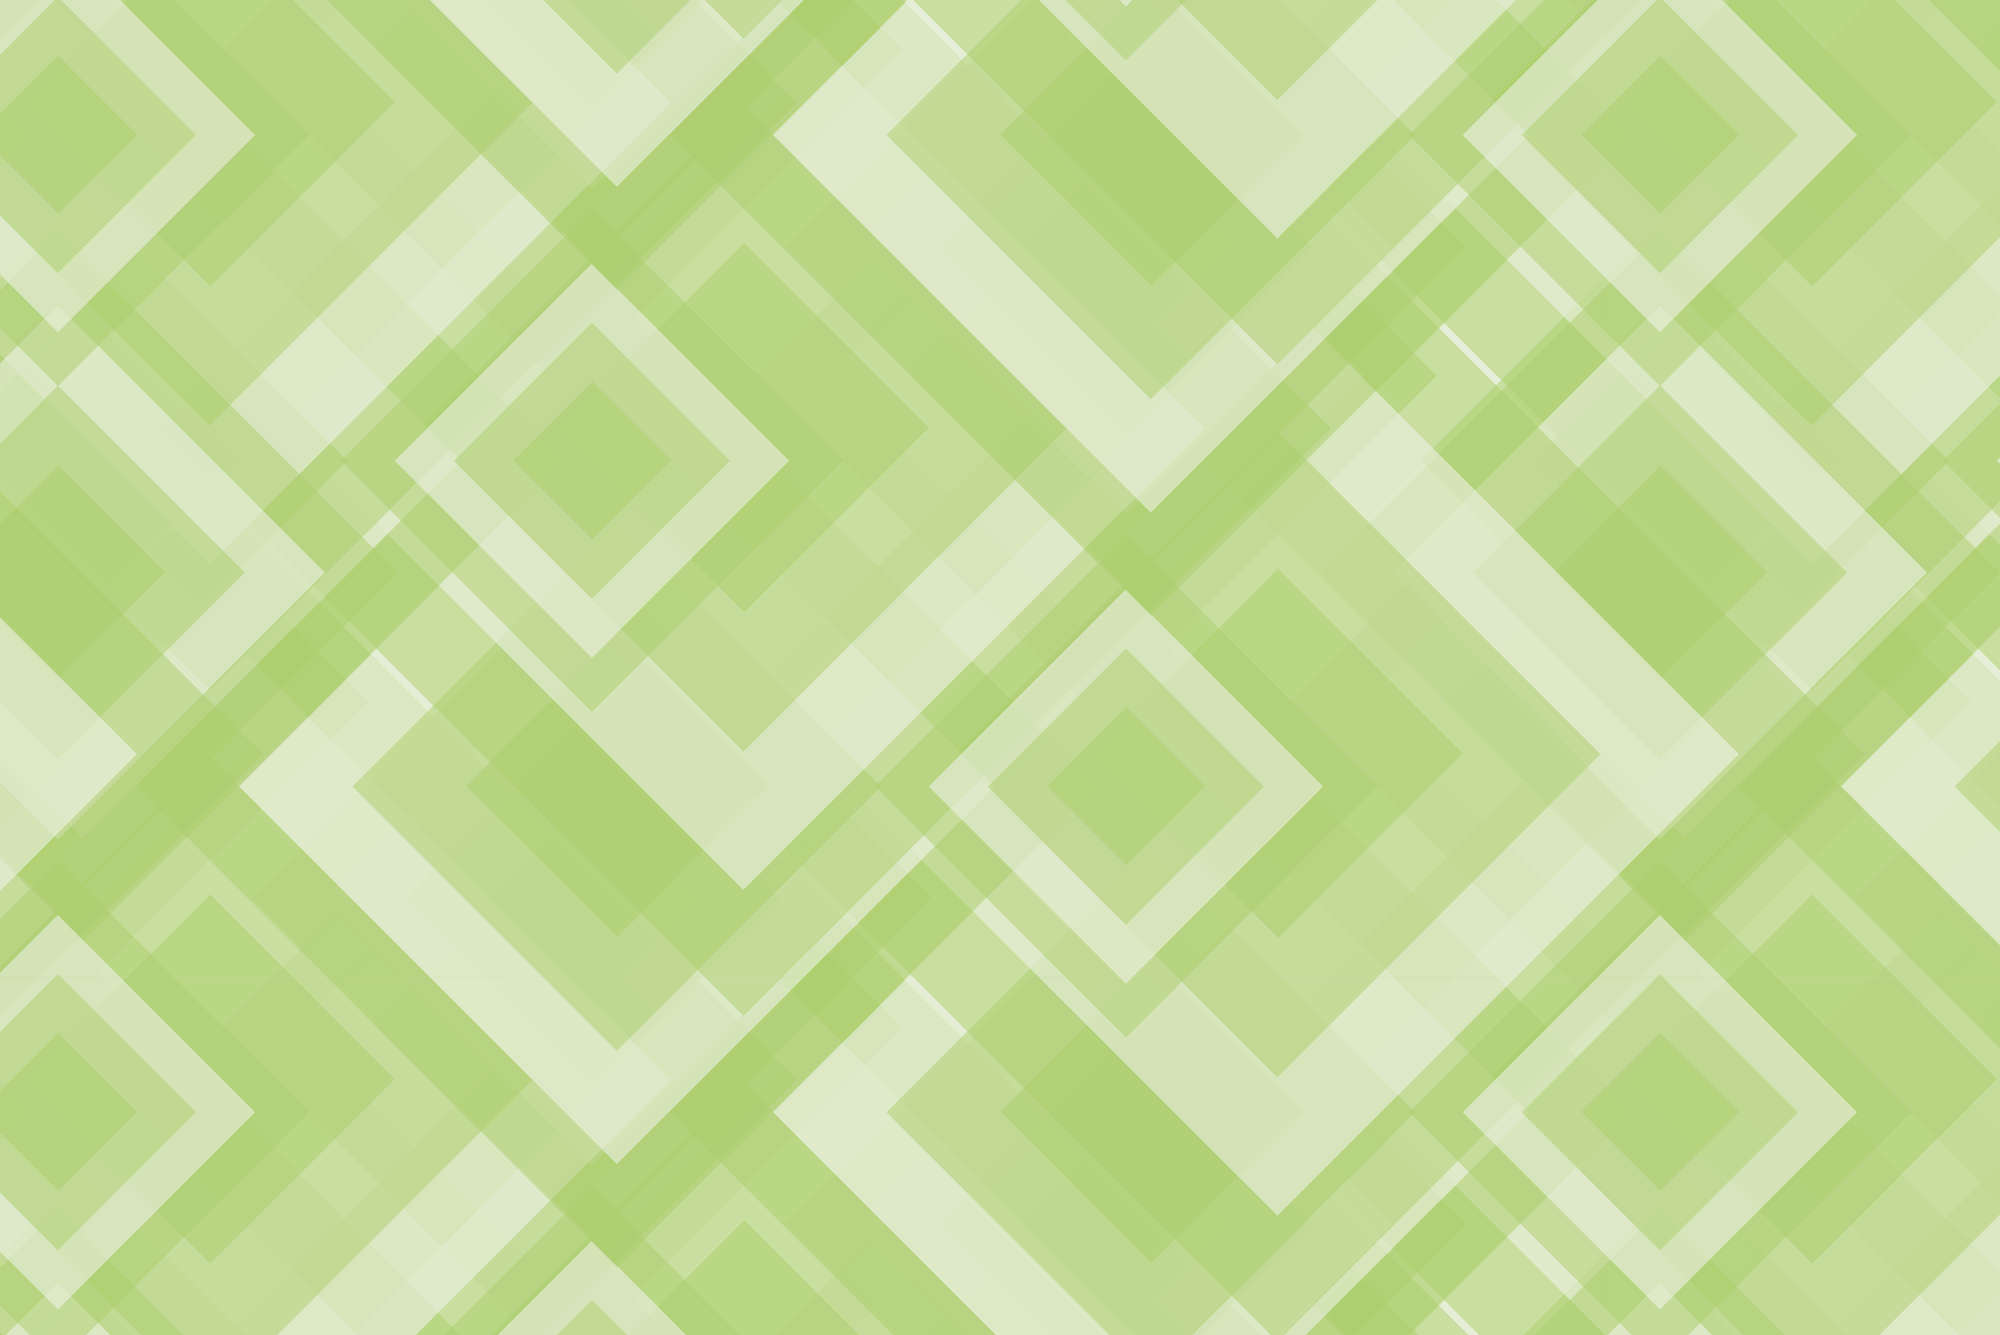             Designbehang overlappende vierkanten groen op parelmoer glad vlies
        